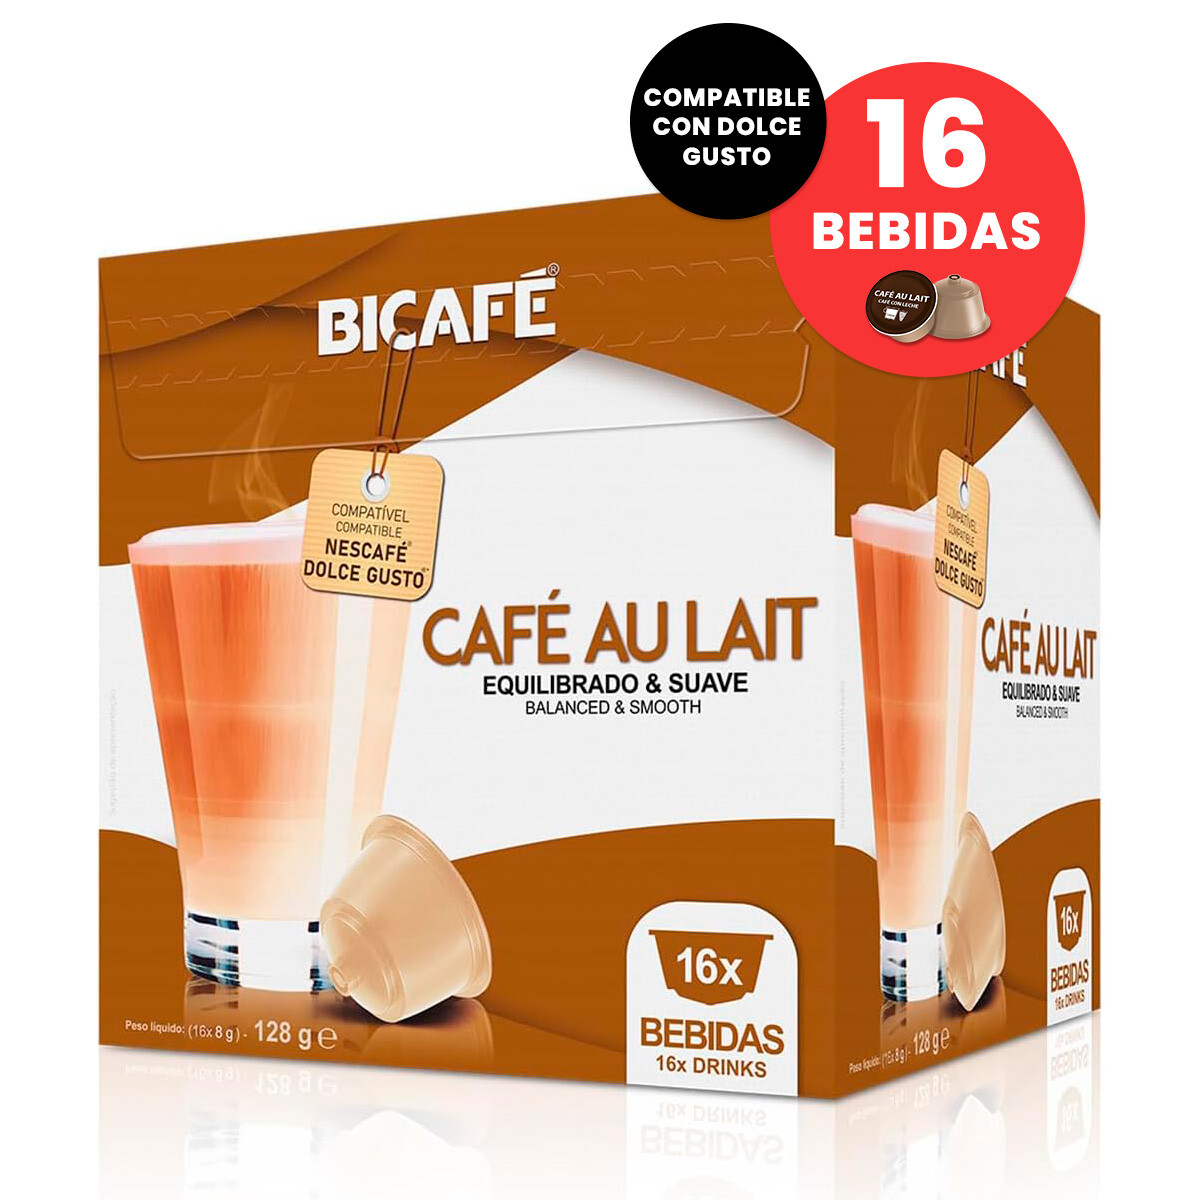 Capsulas Bicafe Cafe Au Lait X16 bebidas Comp Dolce Gusto sin Azucar - 001 